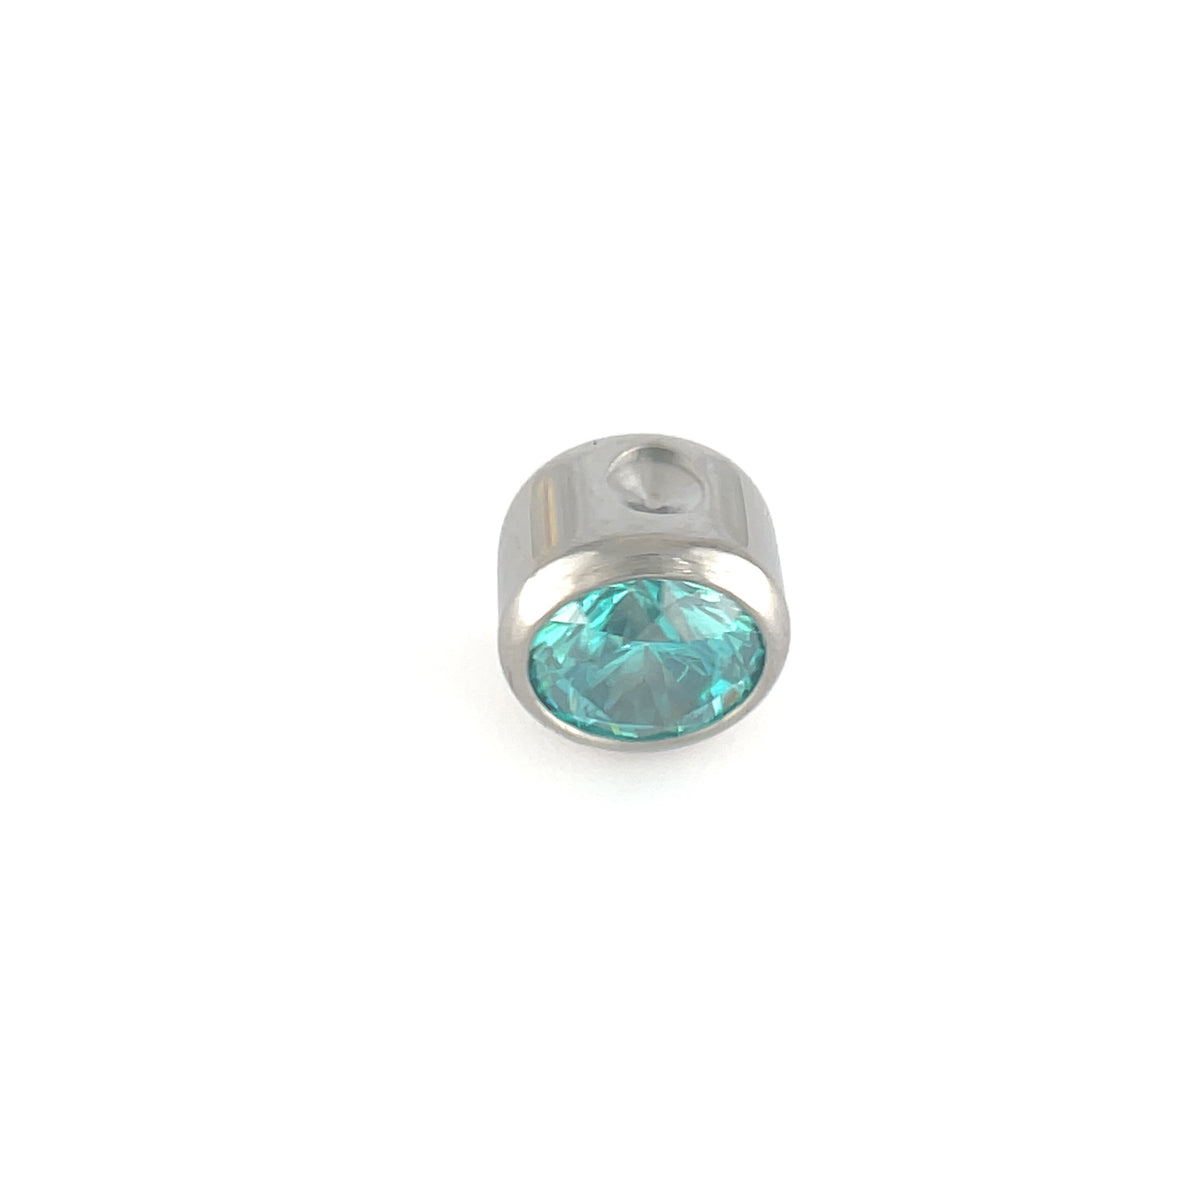 Industrial Strength Titanium Mint Green CZ Gem Captive Bead Ring